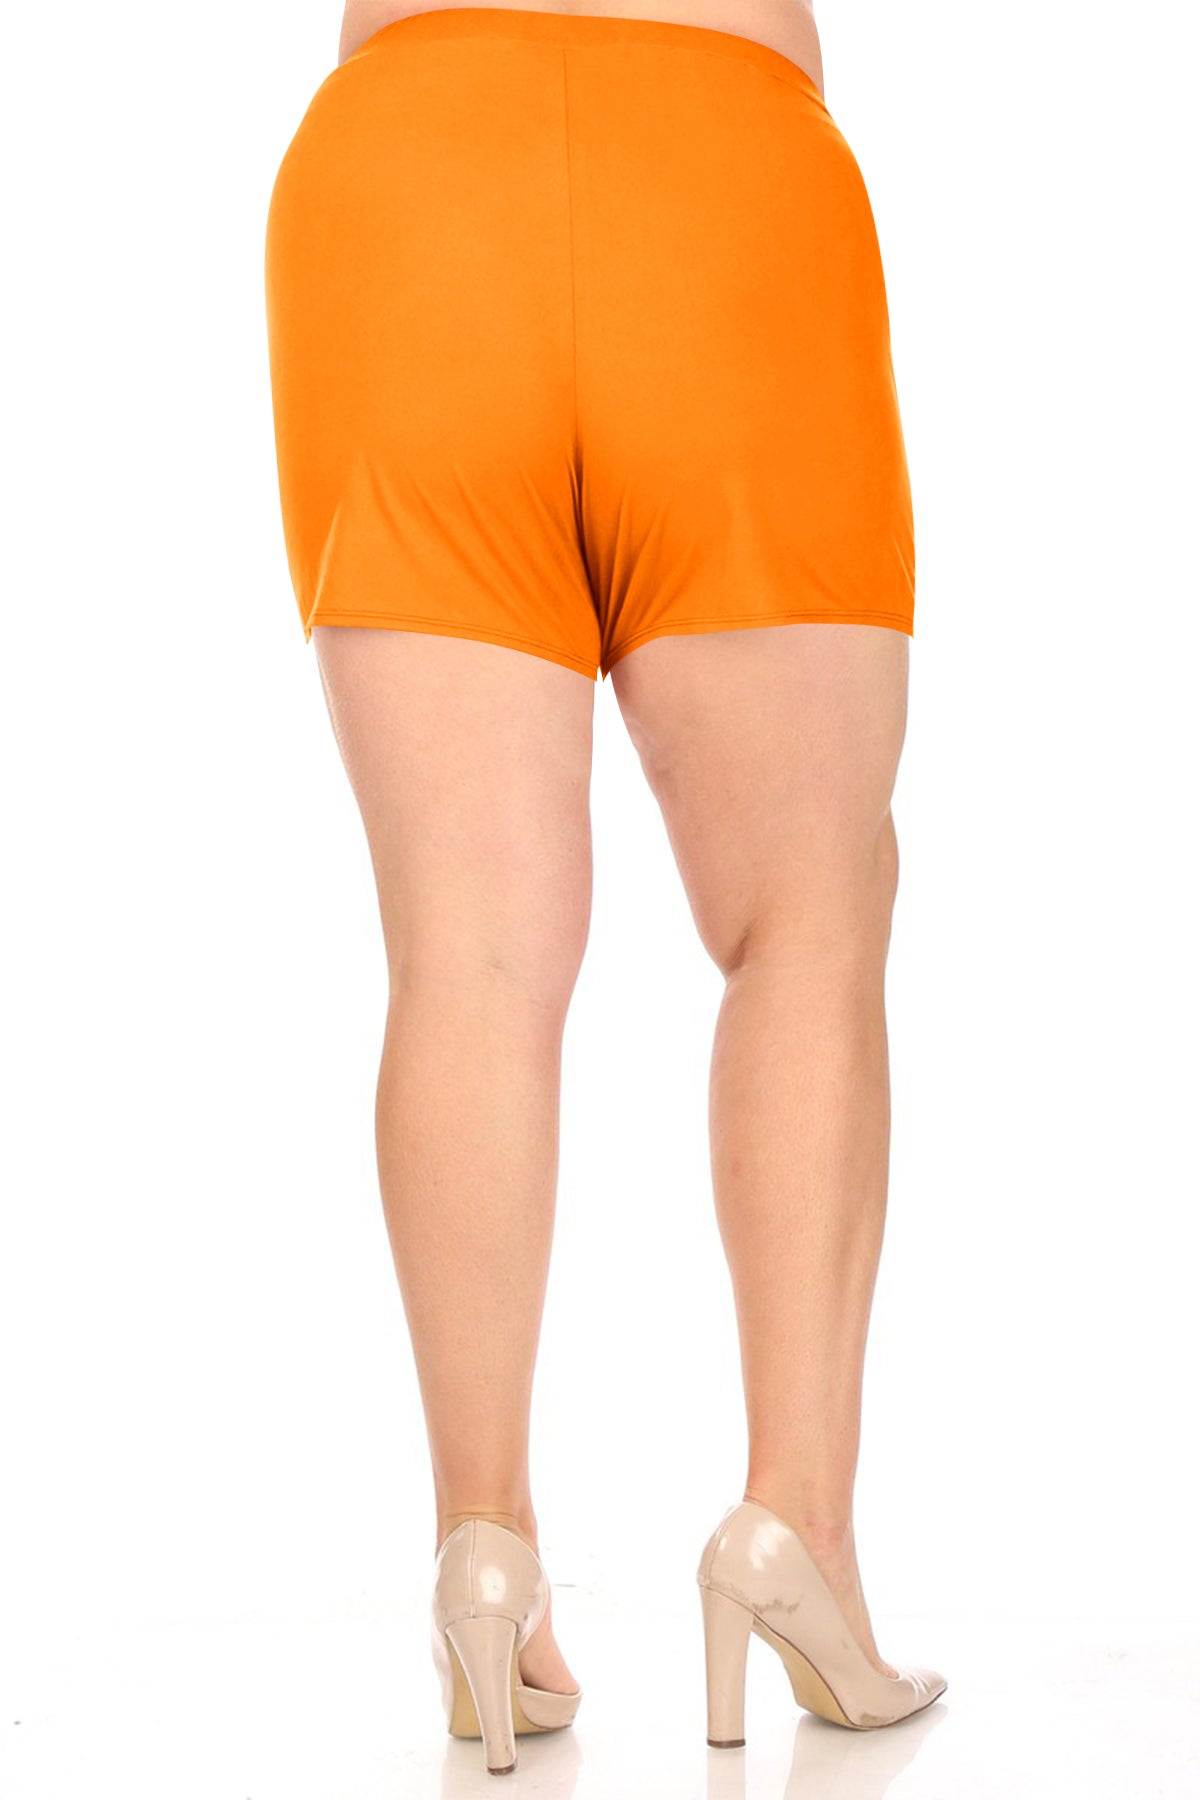 Women's Plus Size Lightweight Elastic High Waist Basic Solid Pants Shorts